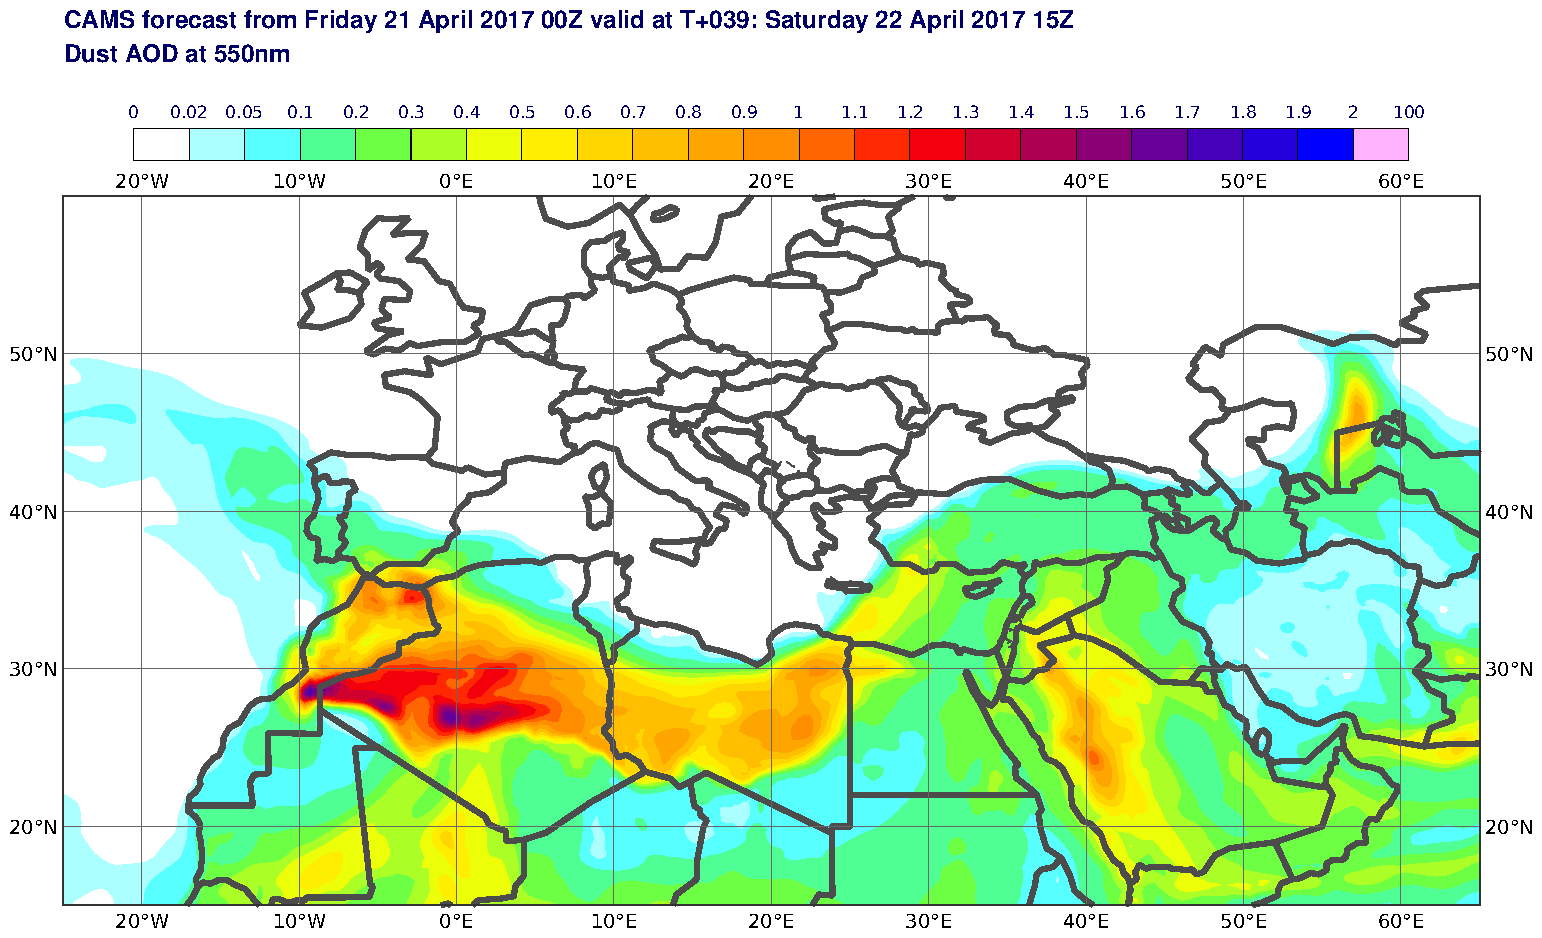 Dust AOD at 550nm valid at T39 - 2017-04-22 15:00